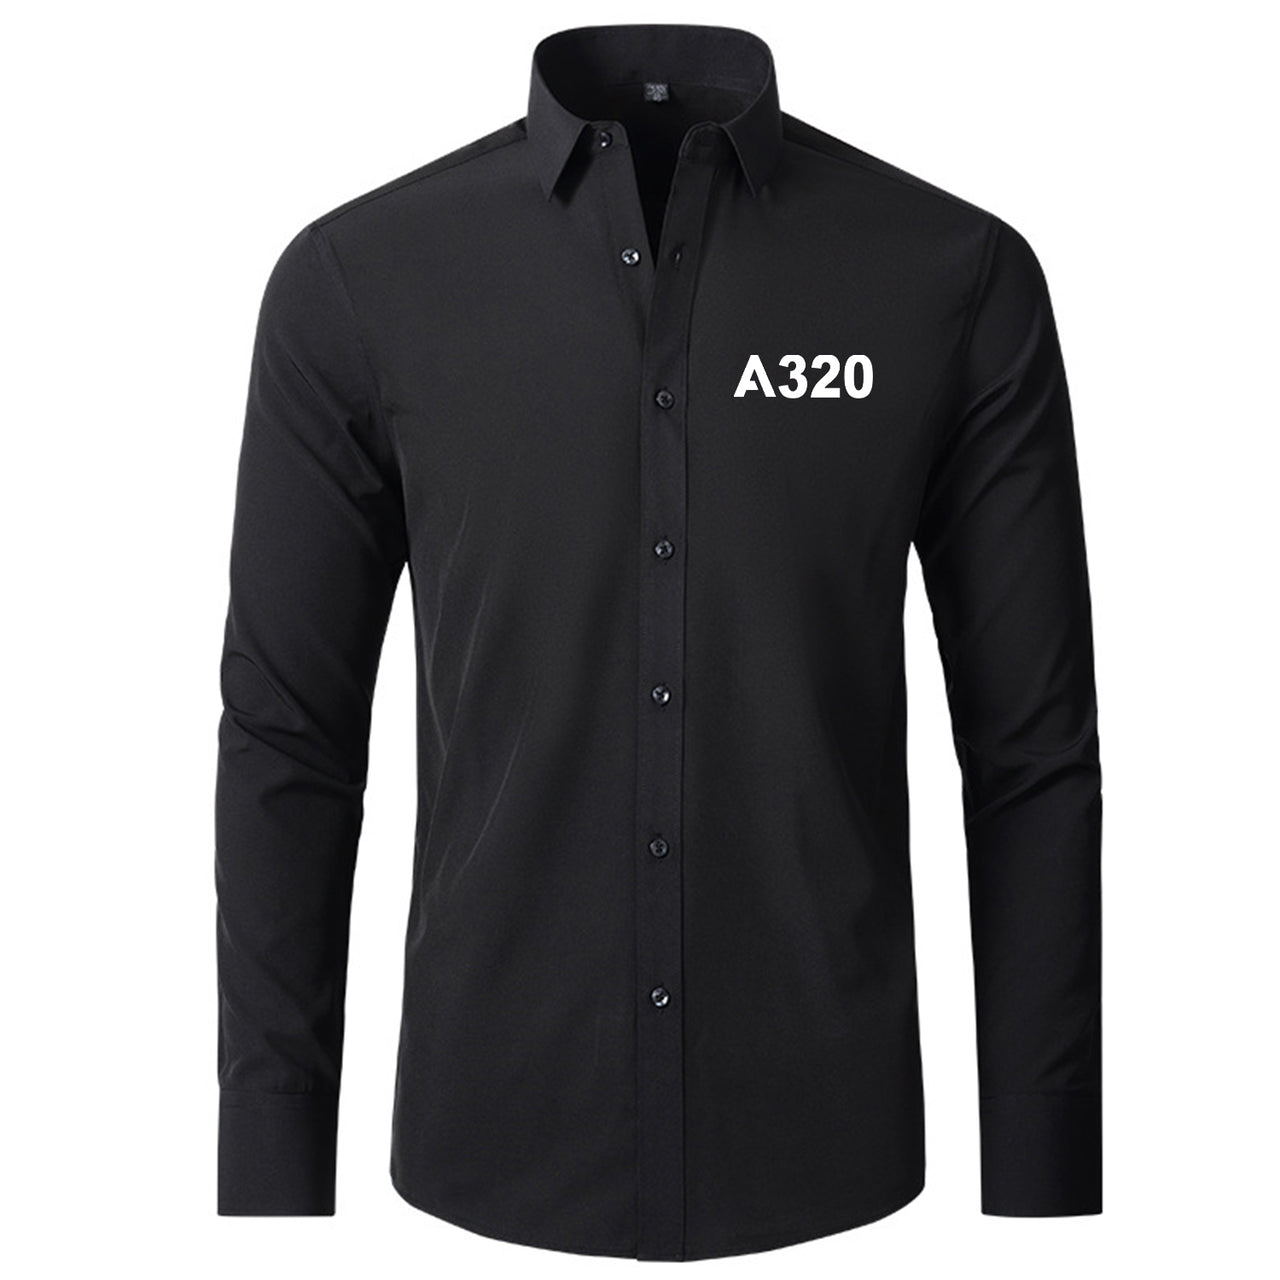 A320 Flat Text Designed Long Sleeve Shirts